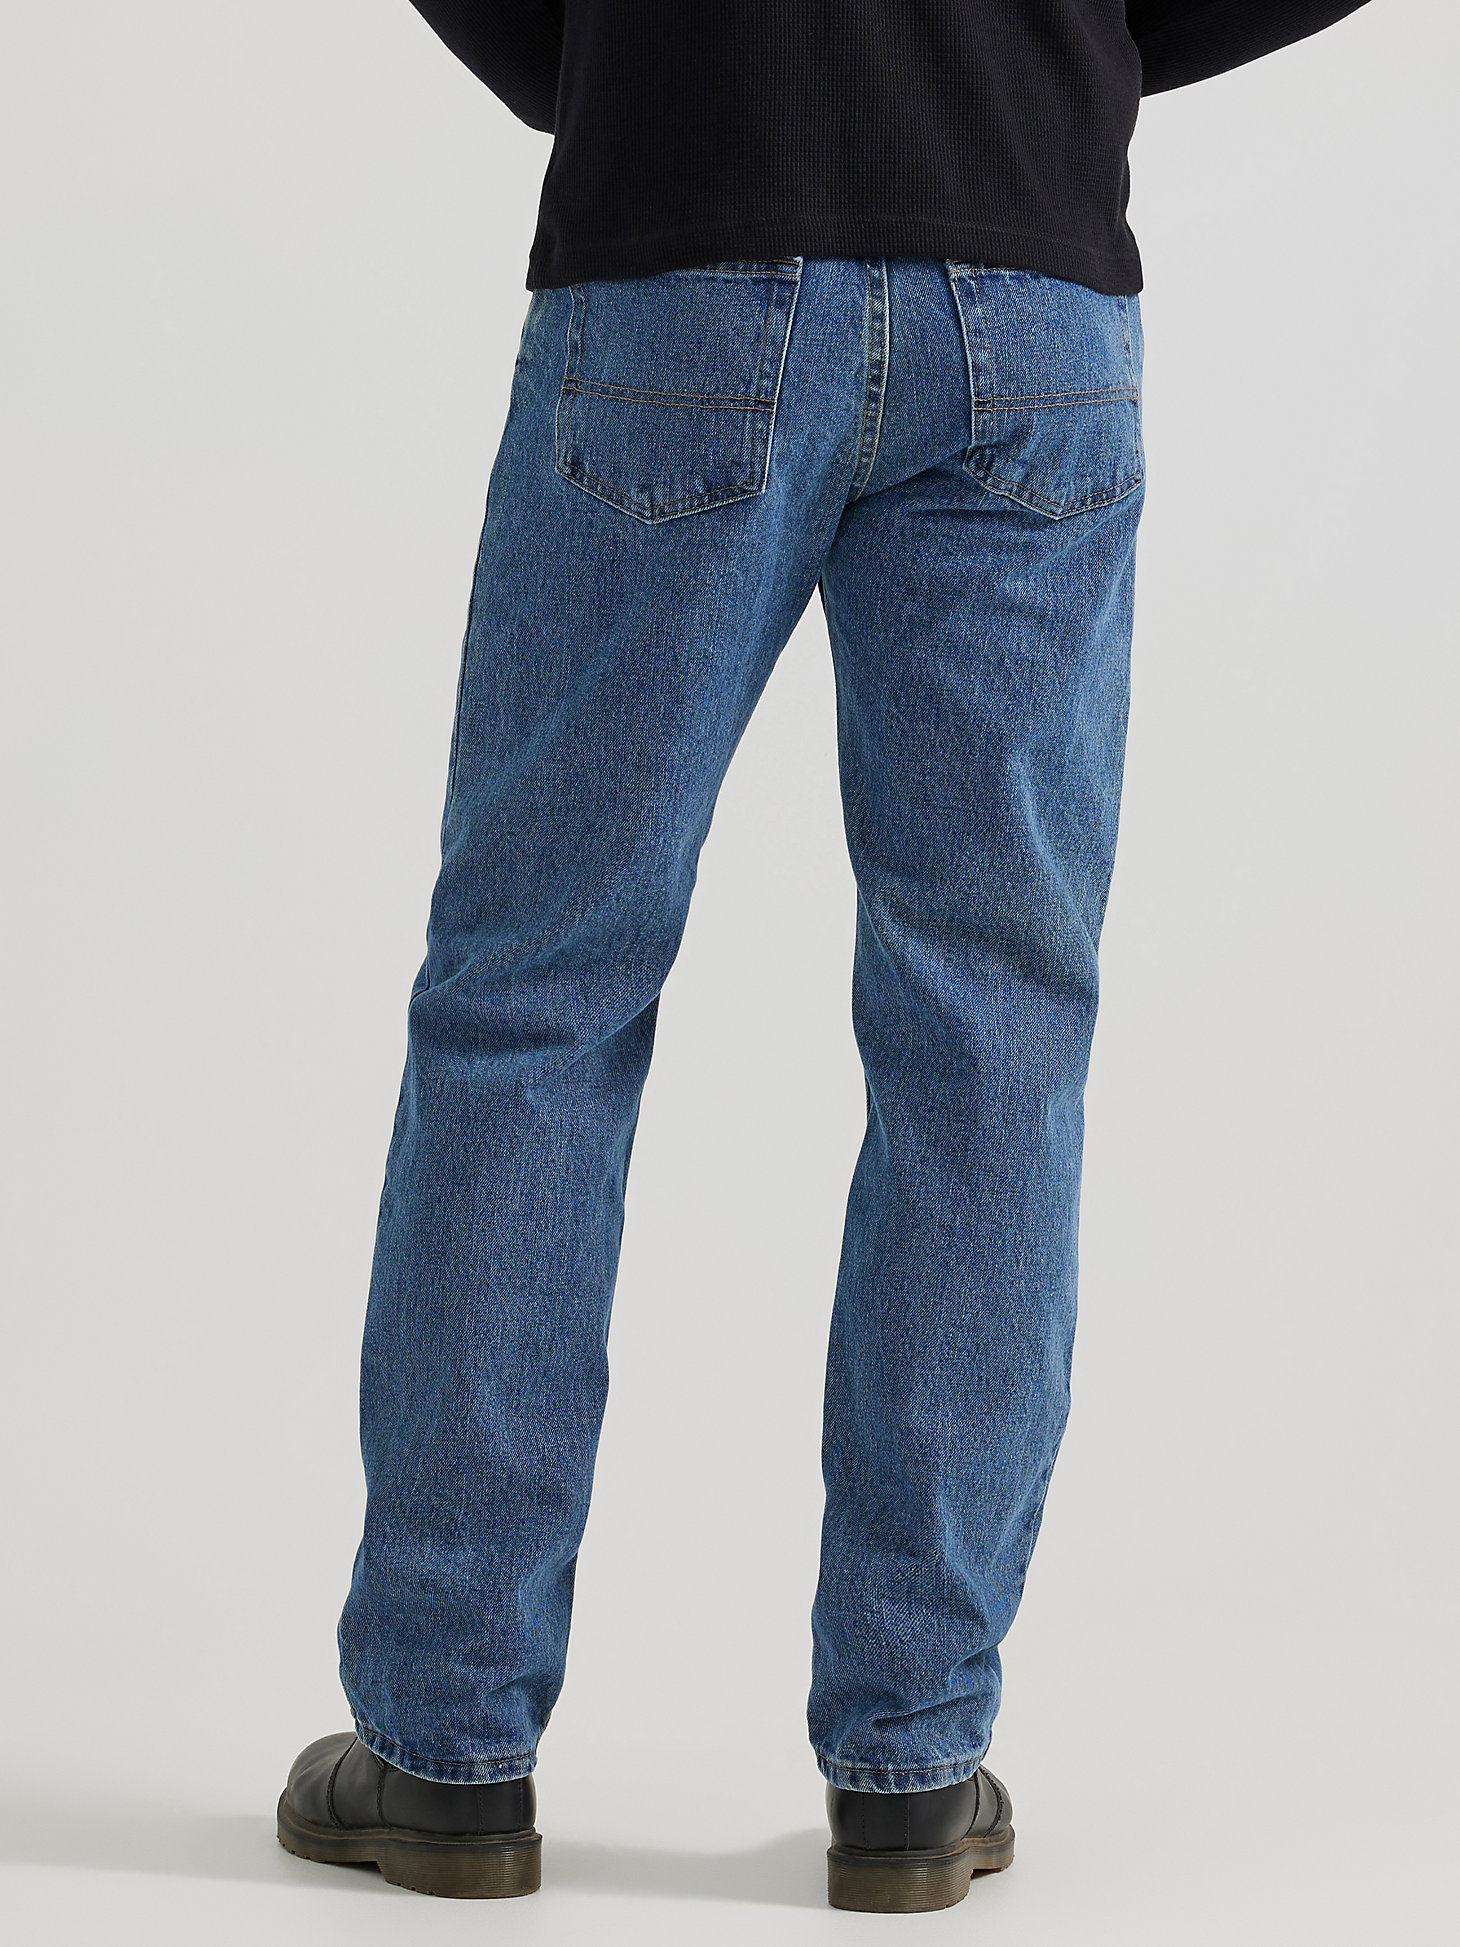 Men's Wrangler Authentics® Regular Fit Cotton Jean in Vintage Blue alternative view 1